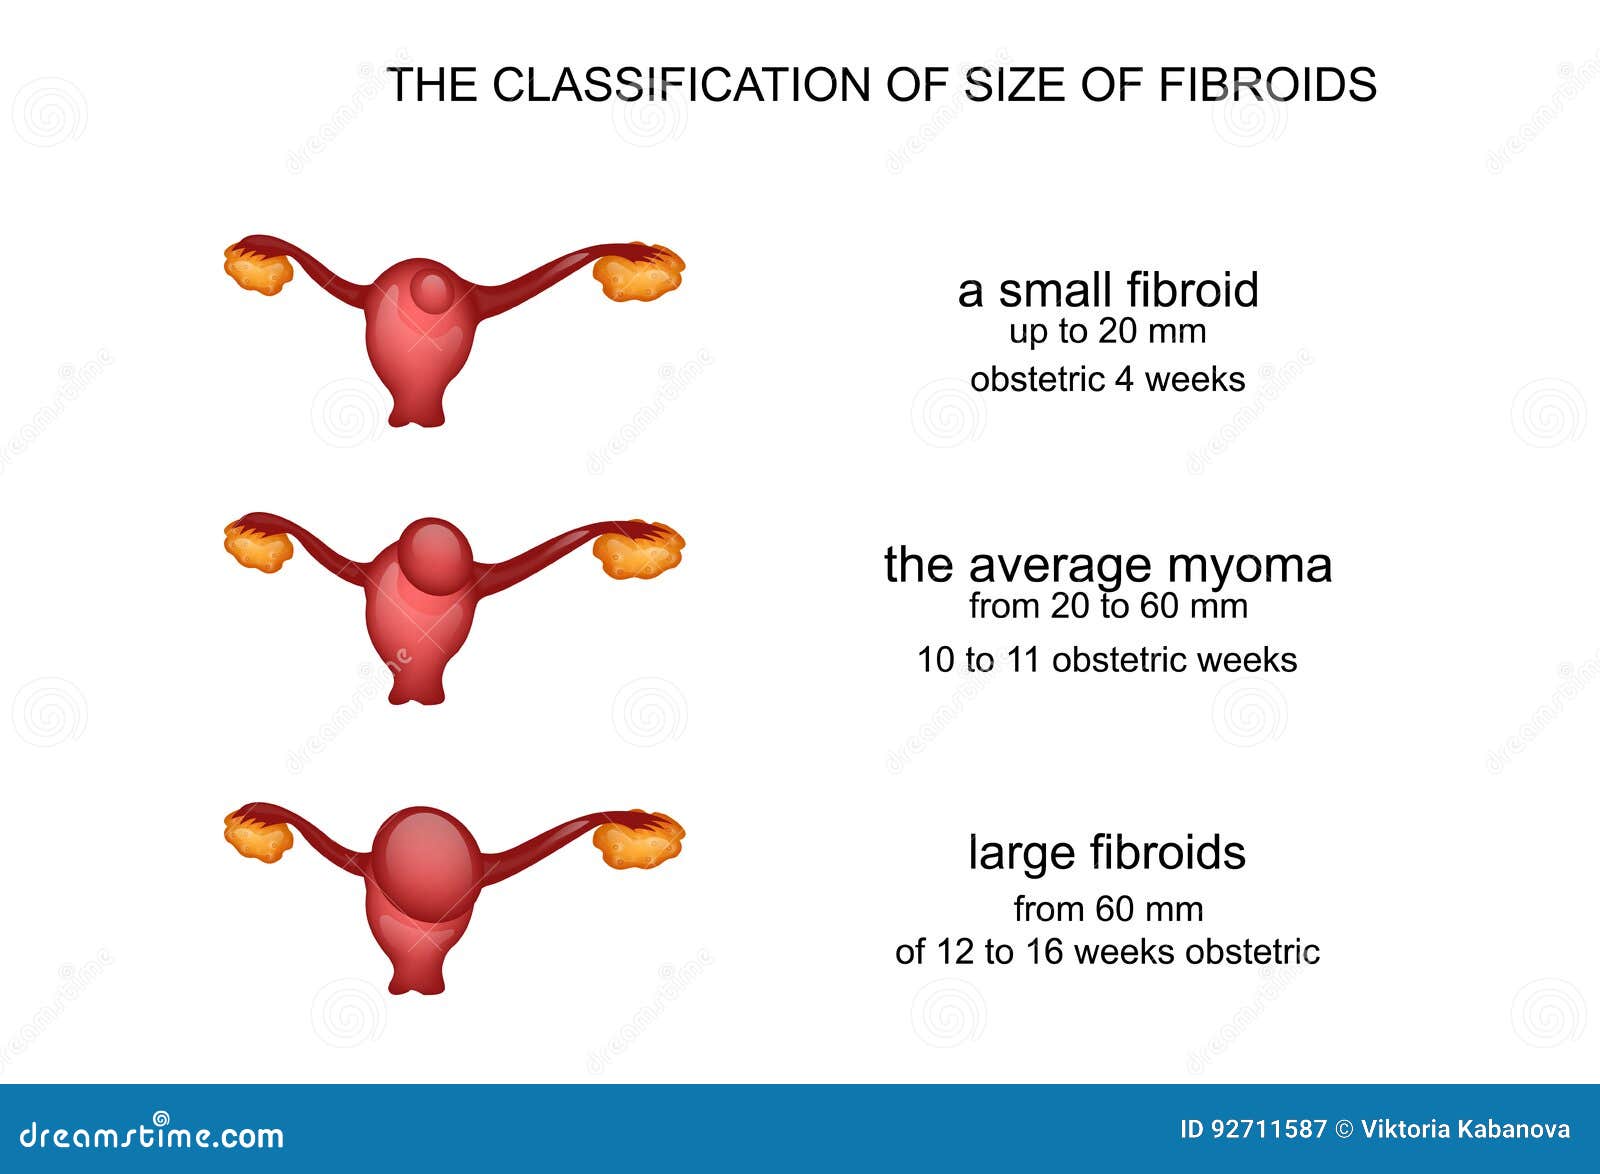 hysteromyoma uterine myoma vector illustration fibroids week pregnancy 92711587